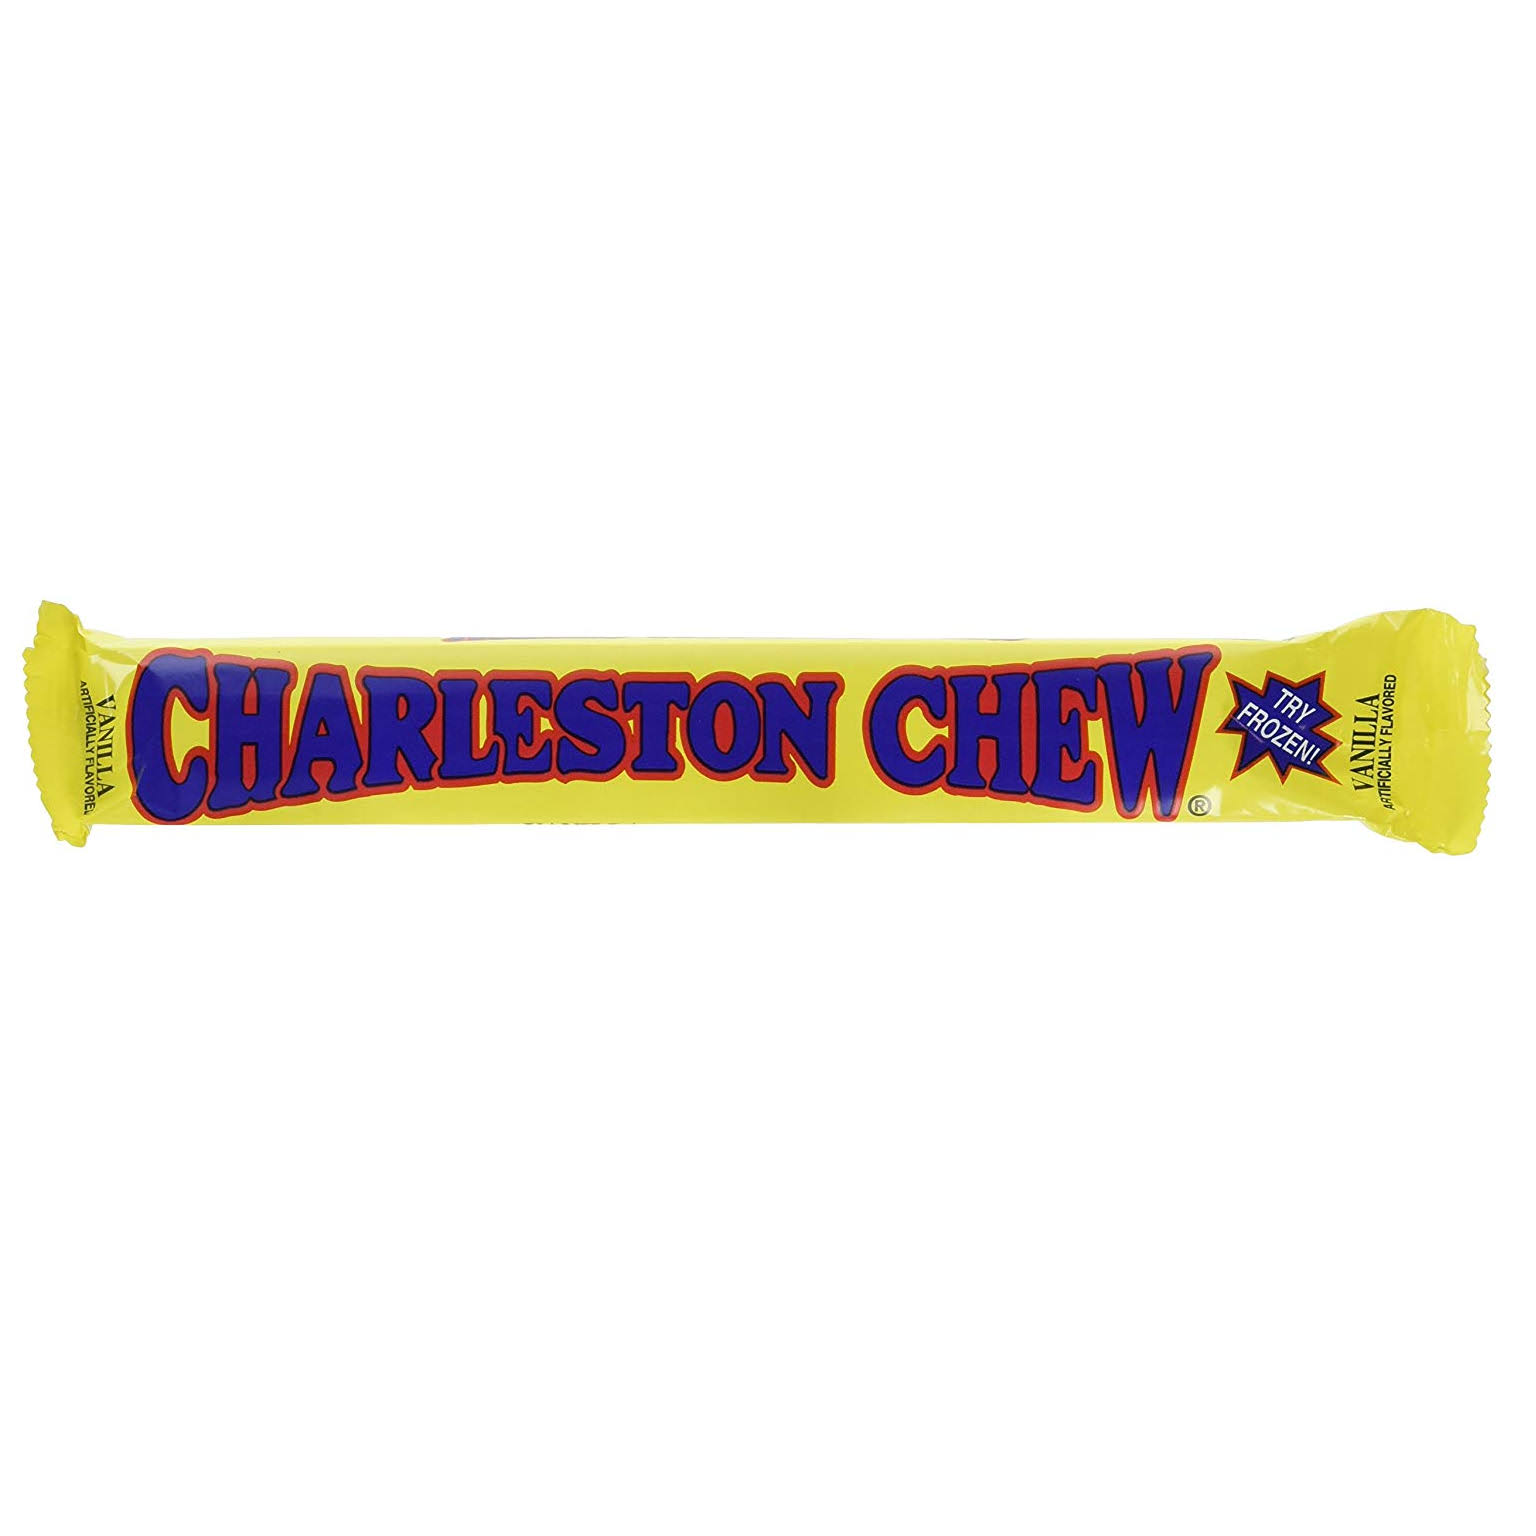 Charleston Chew Candy Bar - Vanilla, 53g